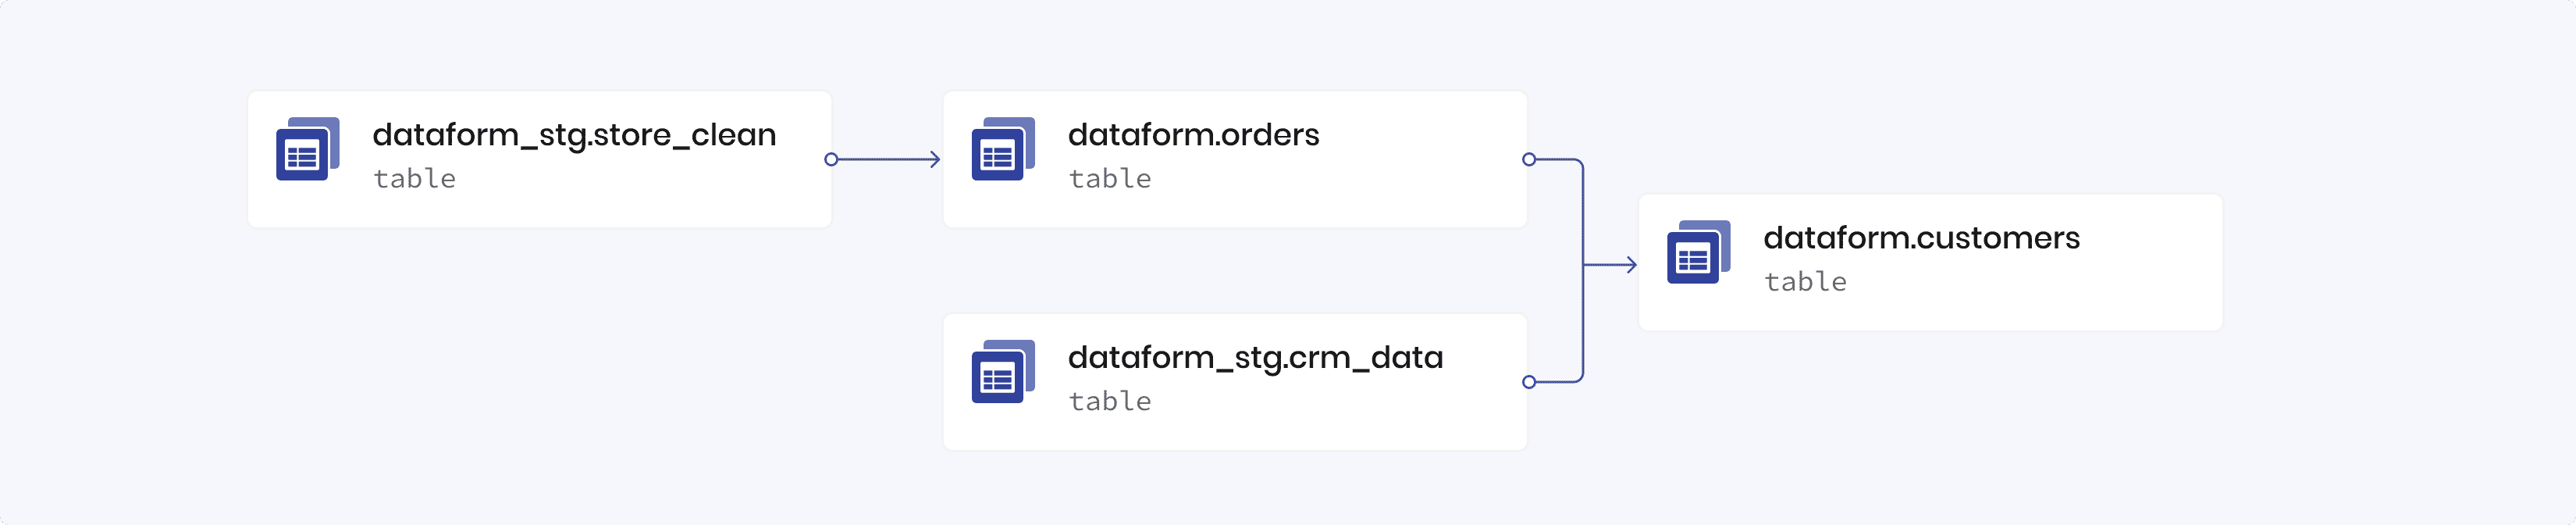 A simple Dataform DAG illustrating table dependency